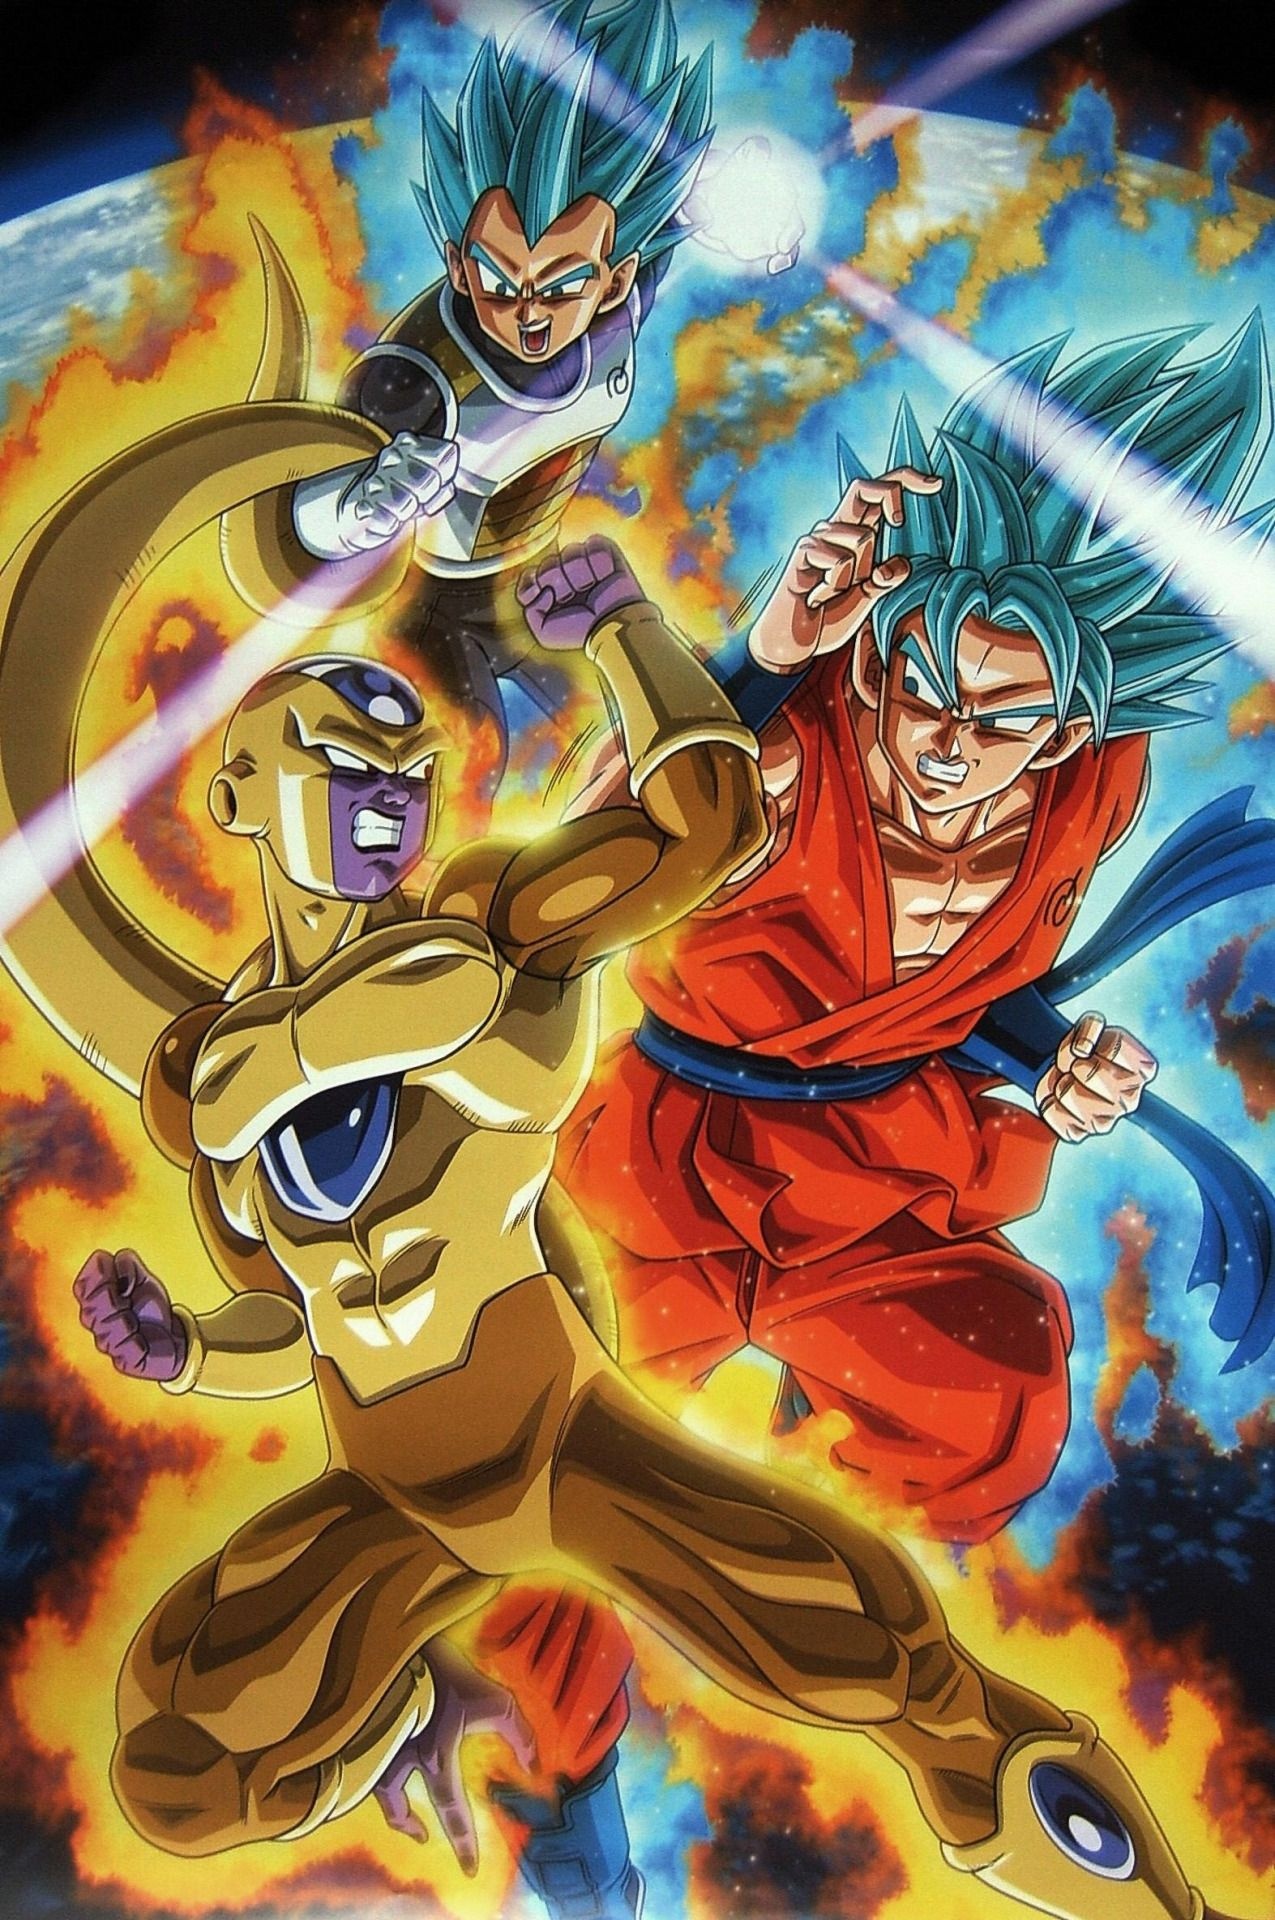 Golden Frieza: Dragonball Z Resurrection F, Battle with Super Saiyan Blue Goku, Japanese cartoon series, Dragon Ball franchise. 1280x1920 HD Wallpaper.